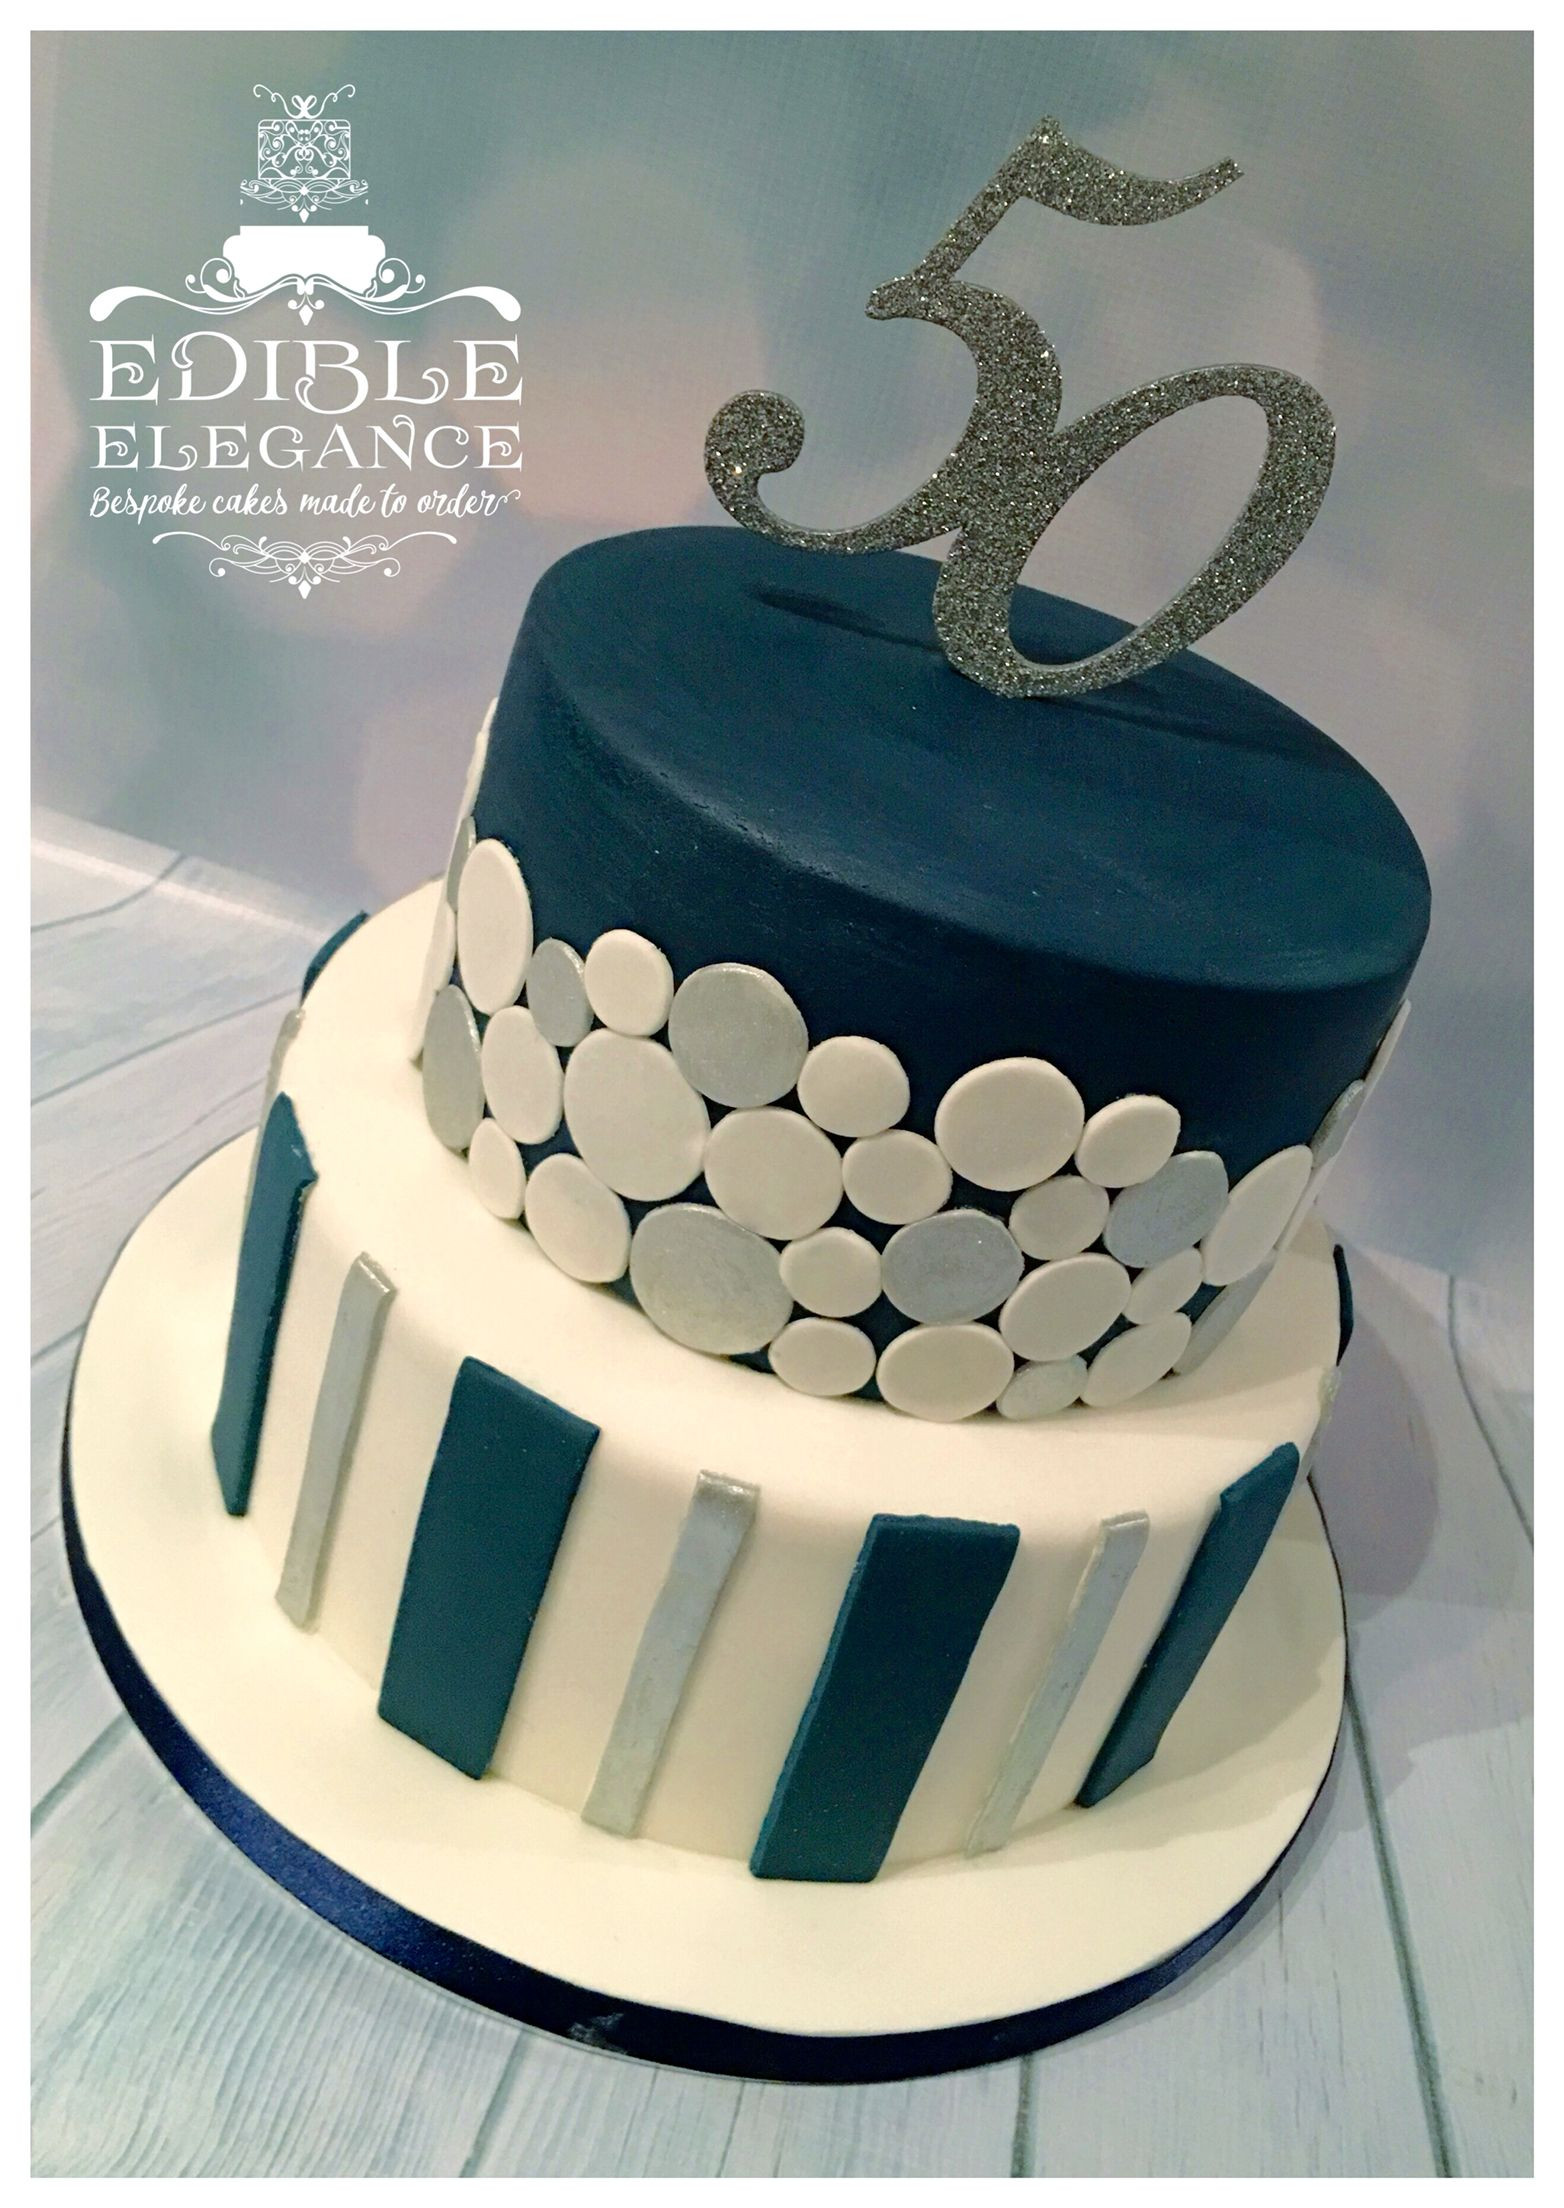 Masculine Birthday Cakes
 50th birthday cake contemporary design in masculine blue